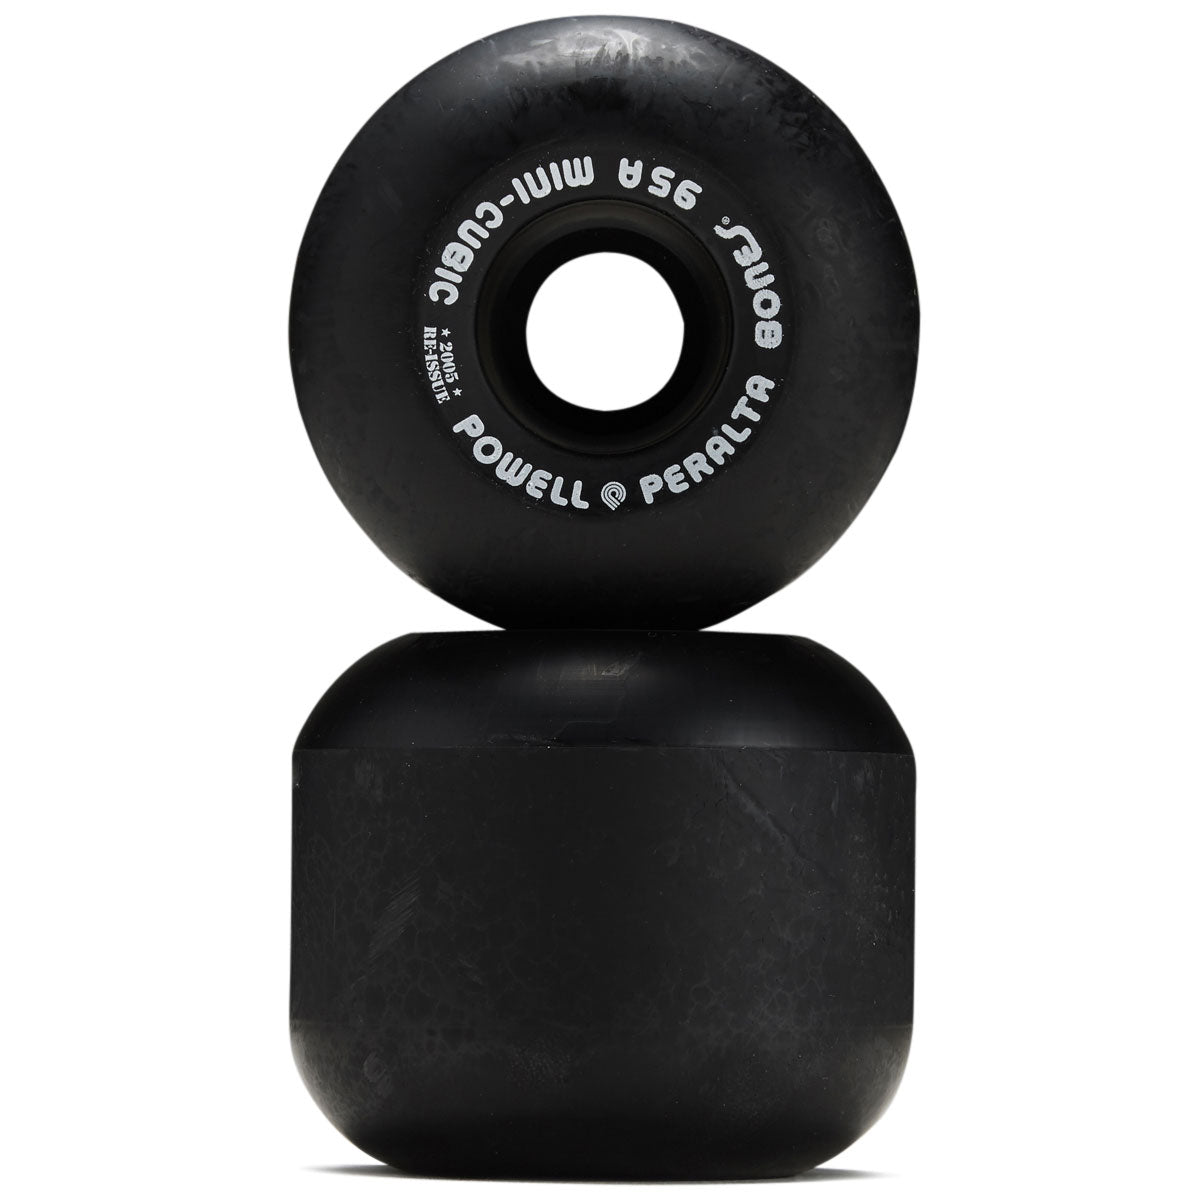 Powell Peralta Mini Cubics 95A Skateboard Wheels - Black - 64mm image 2